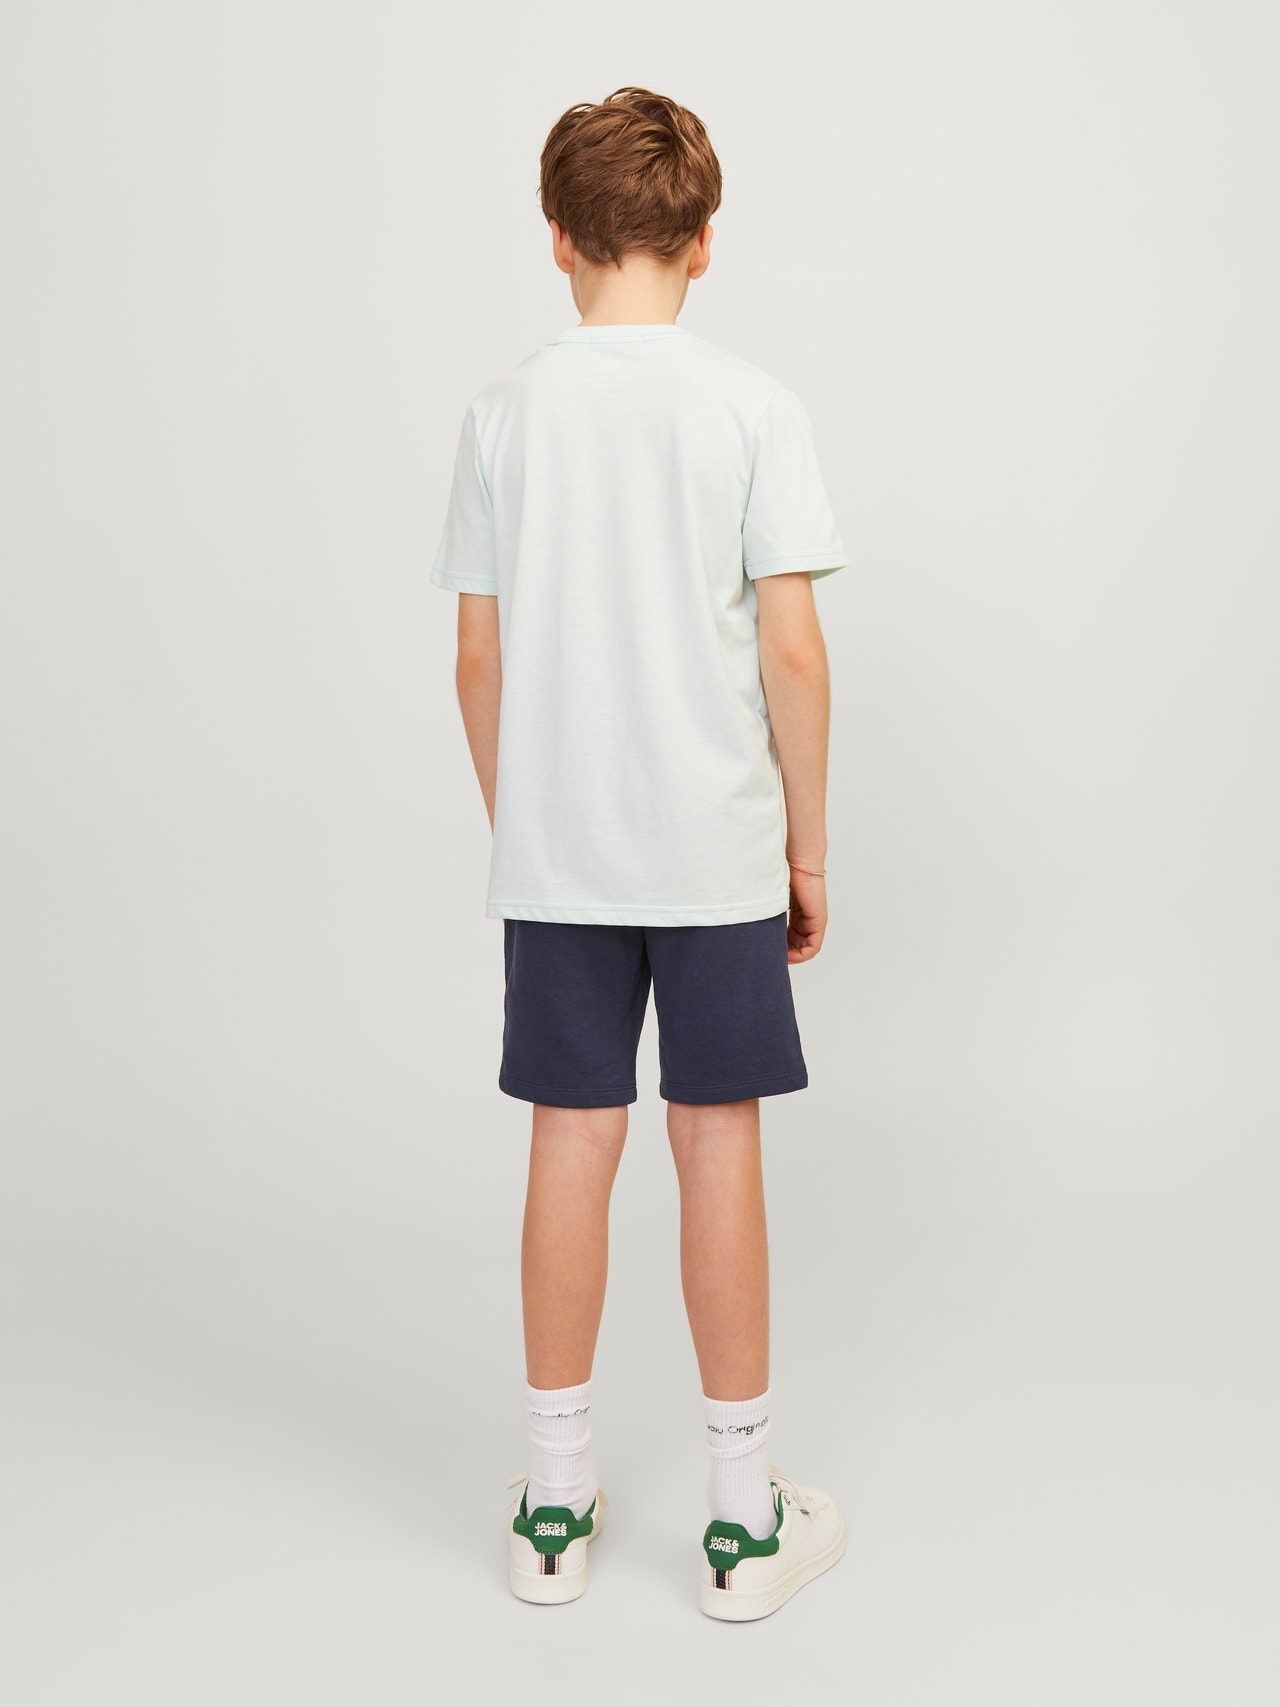 Jack & Jones Slim Fit Sweat shorts For boys -Navy Blazer - 12255265